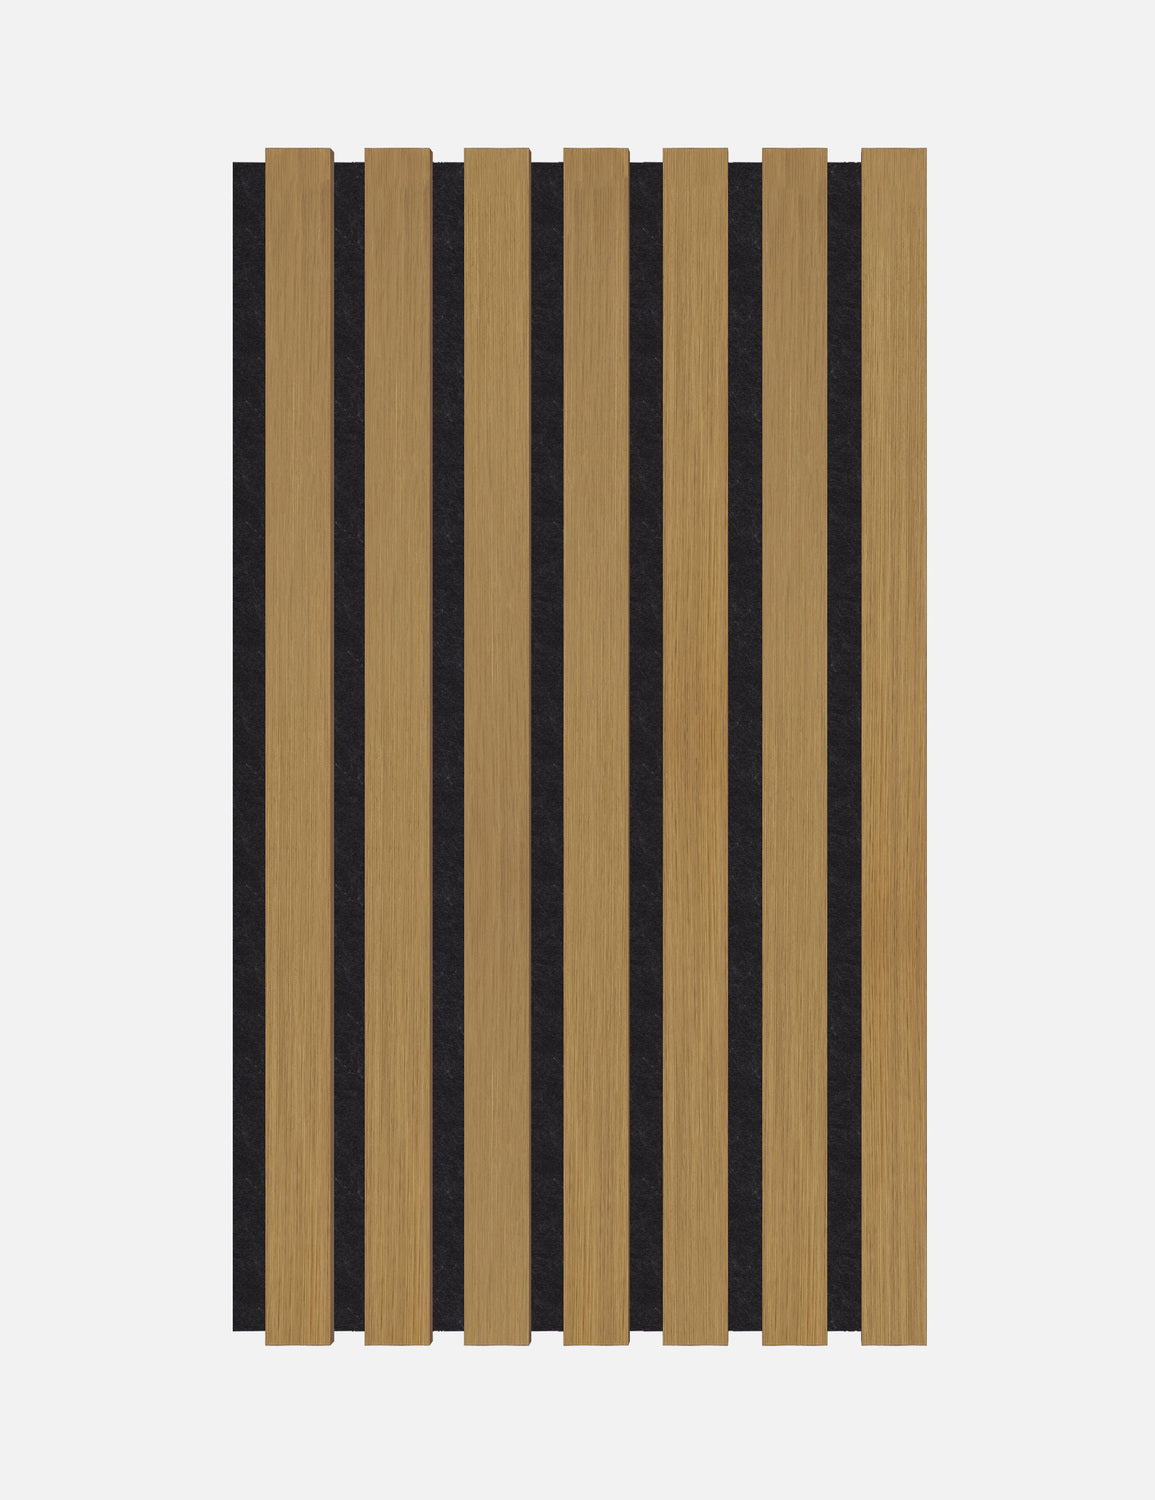 Muster Eiche geölt MDF Natur Trendig - 20x12x1,6cm